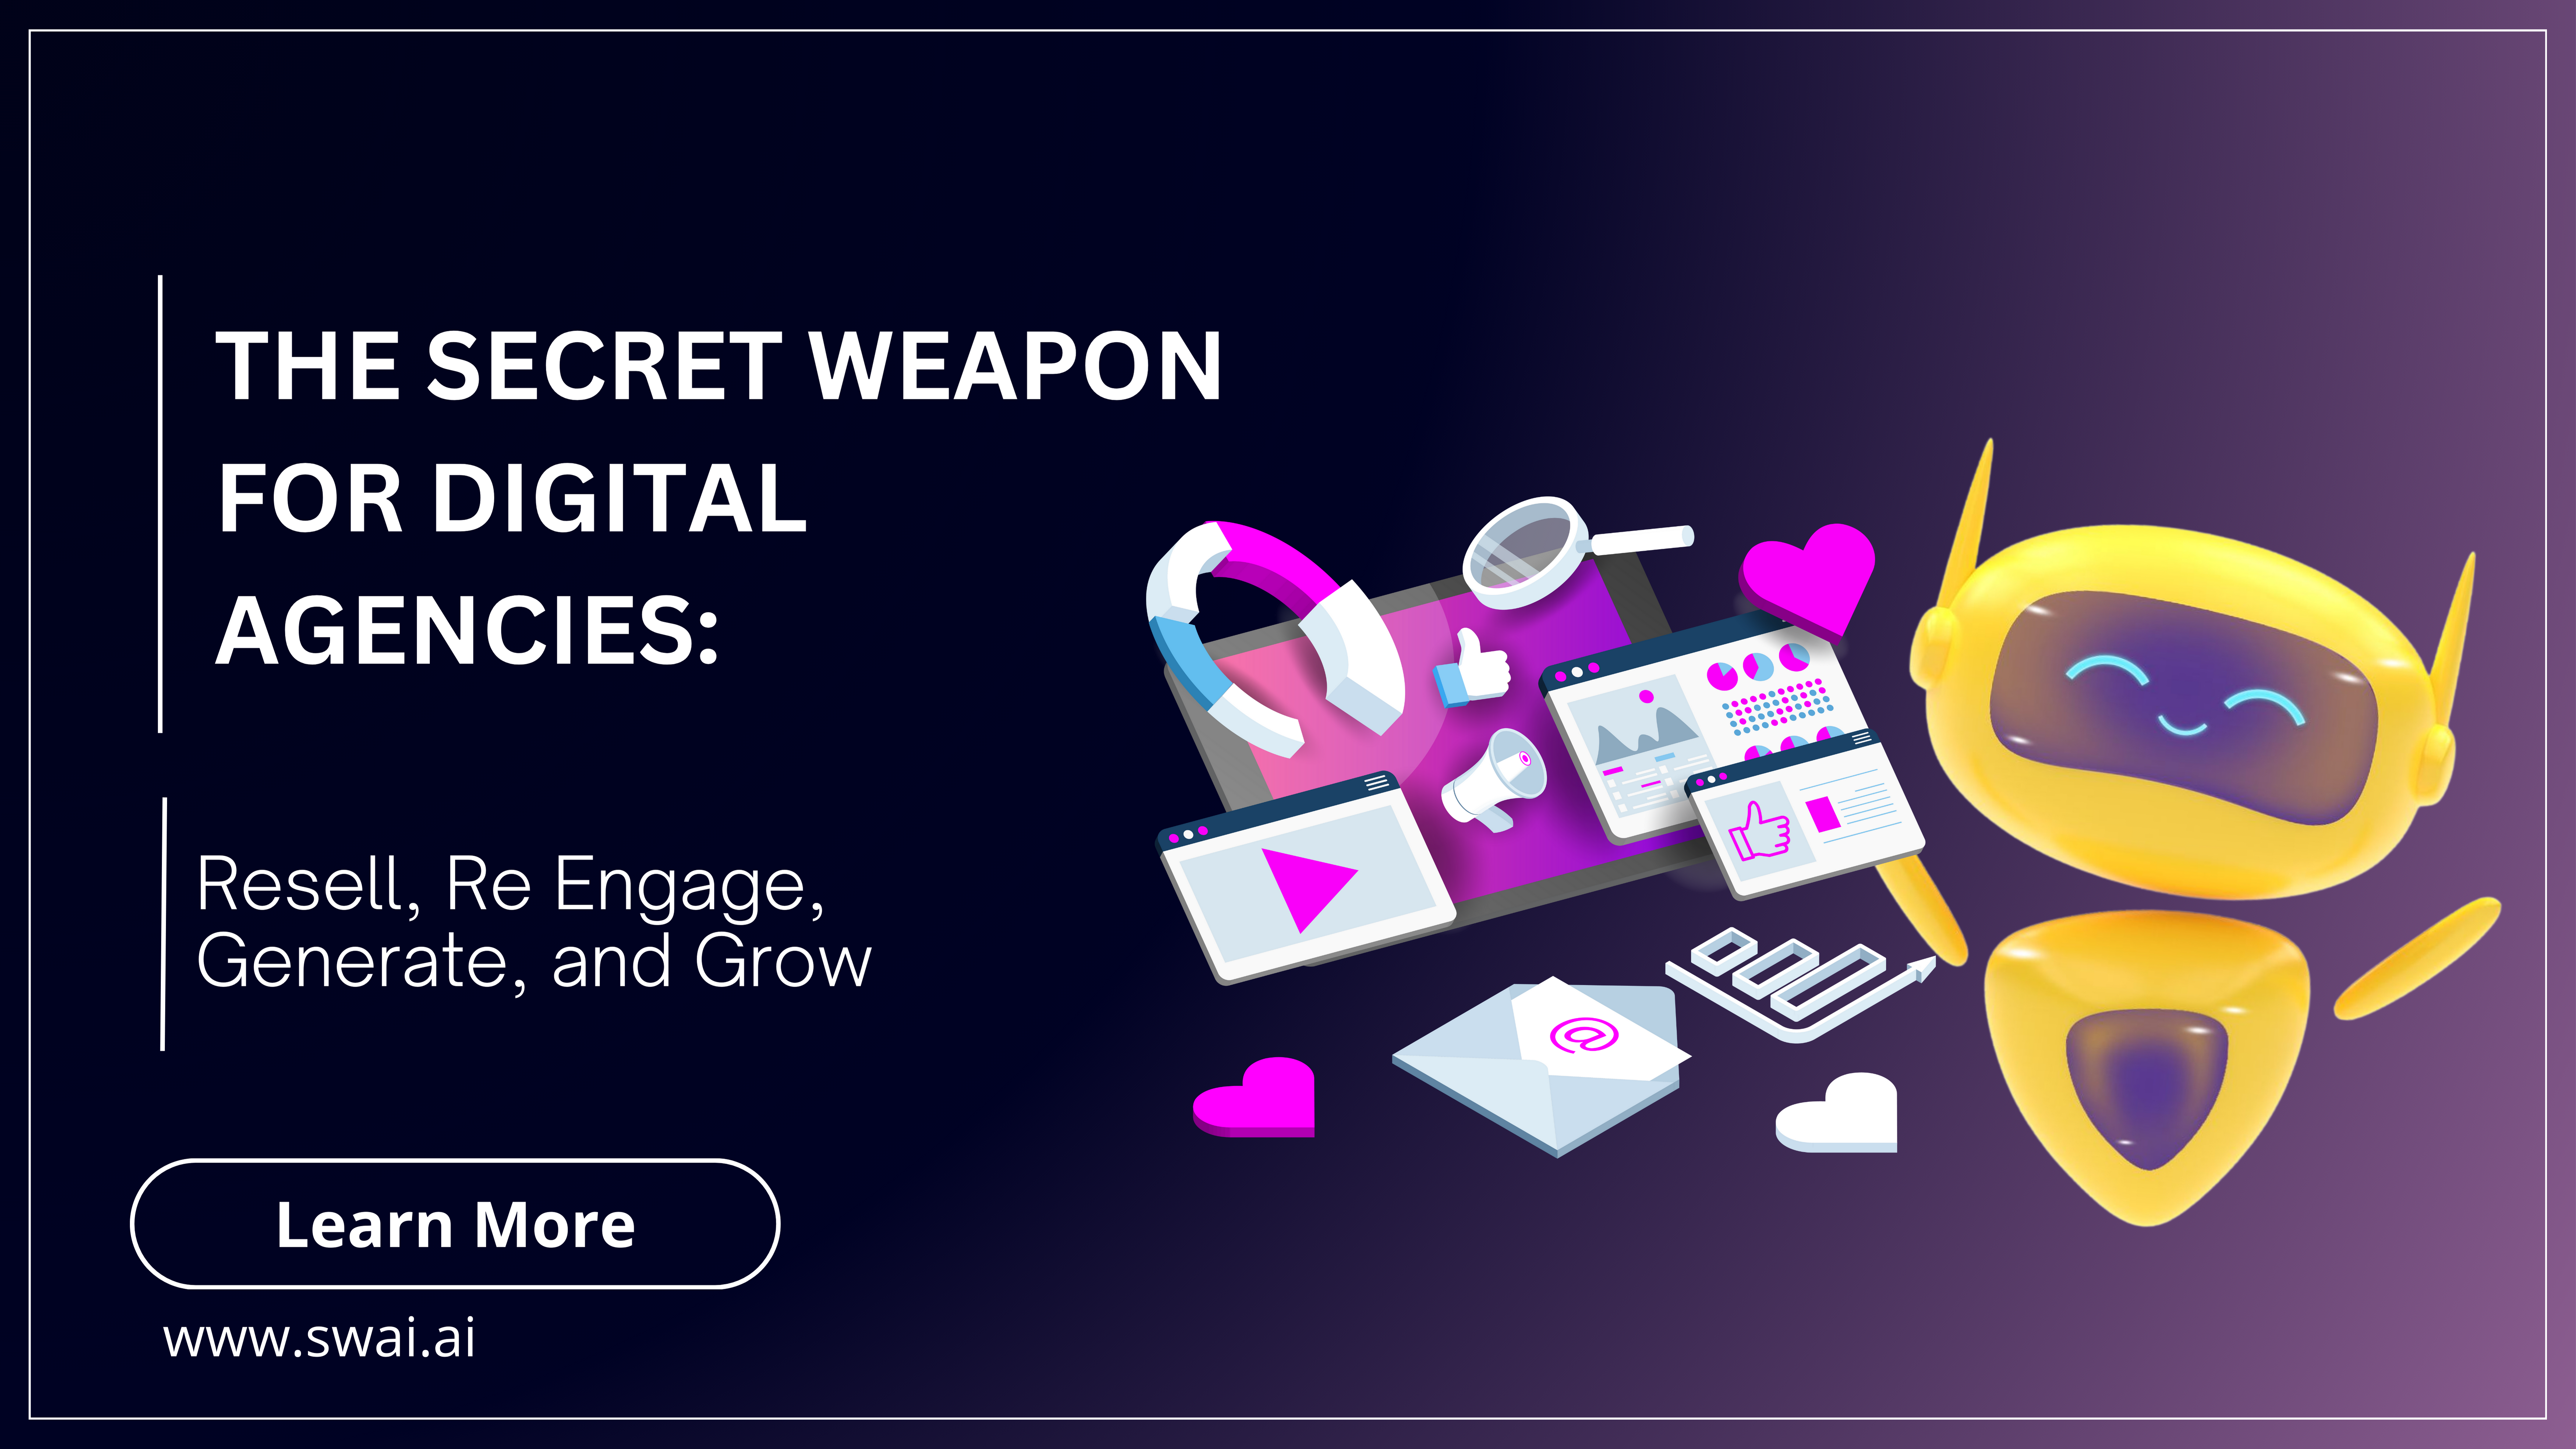 The Secret Weapon for Digital Agencies